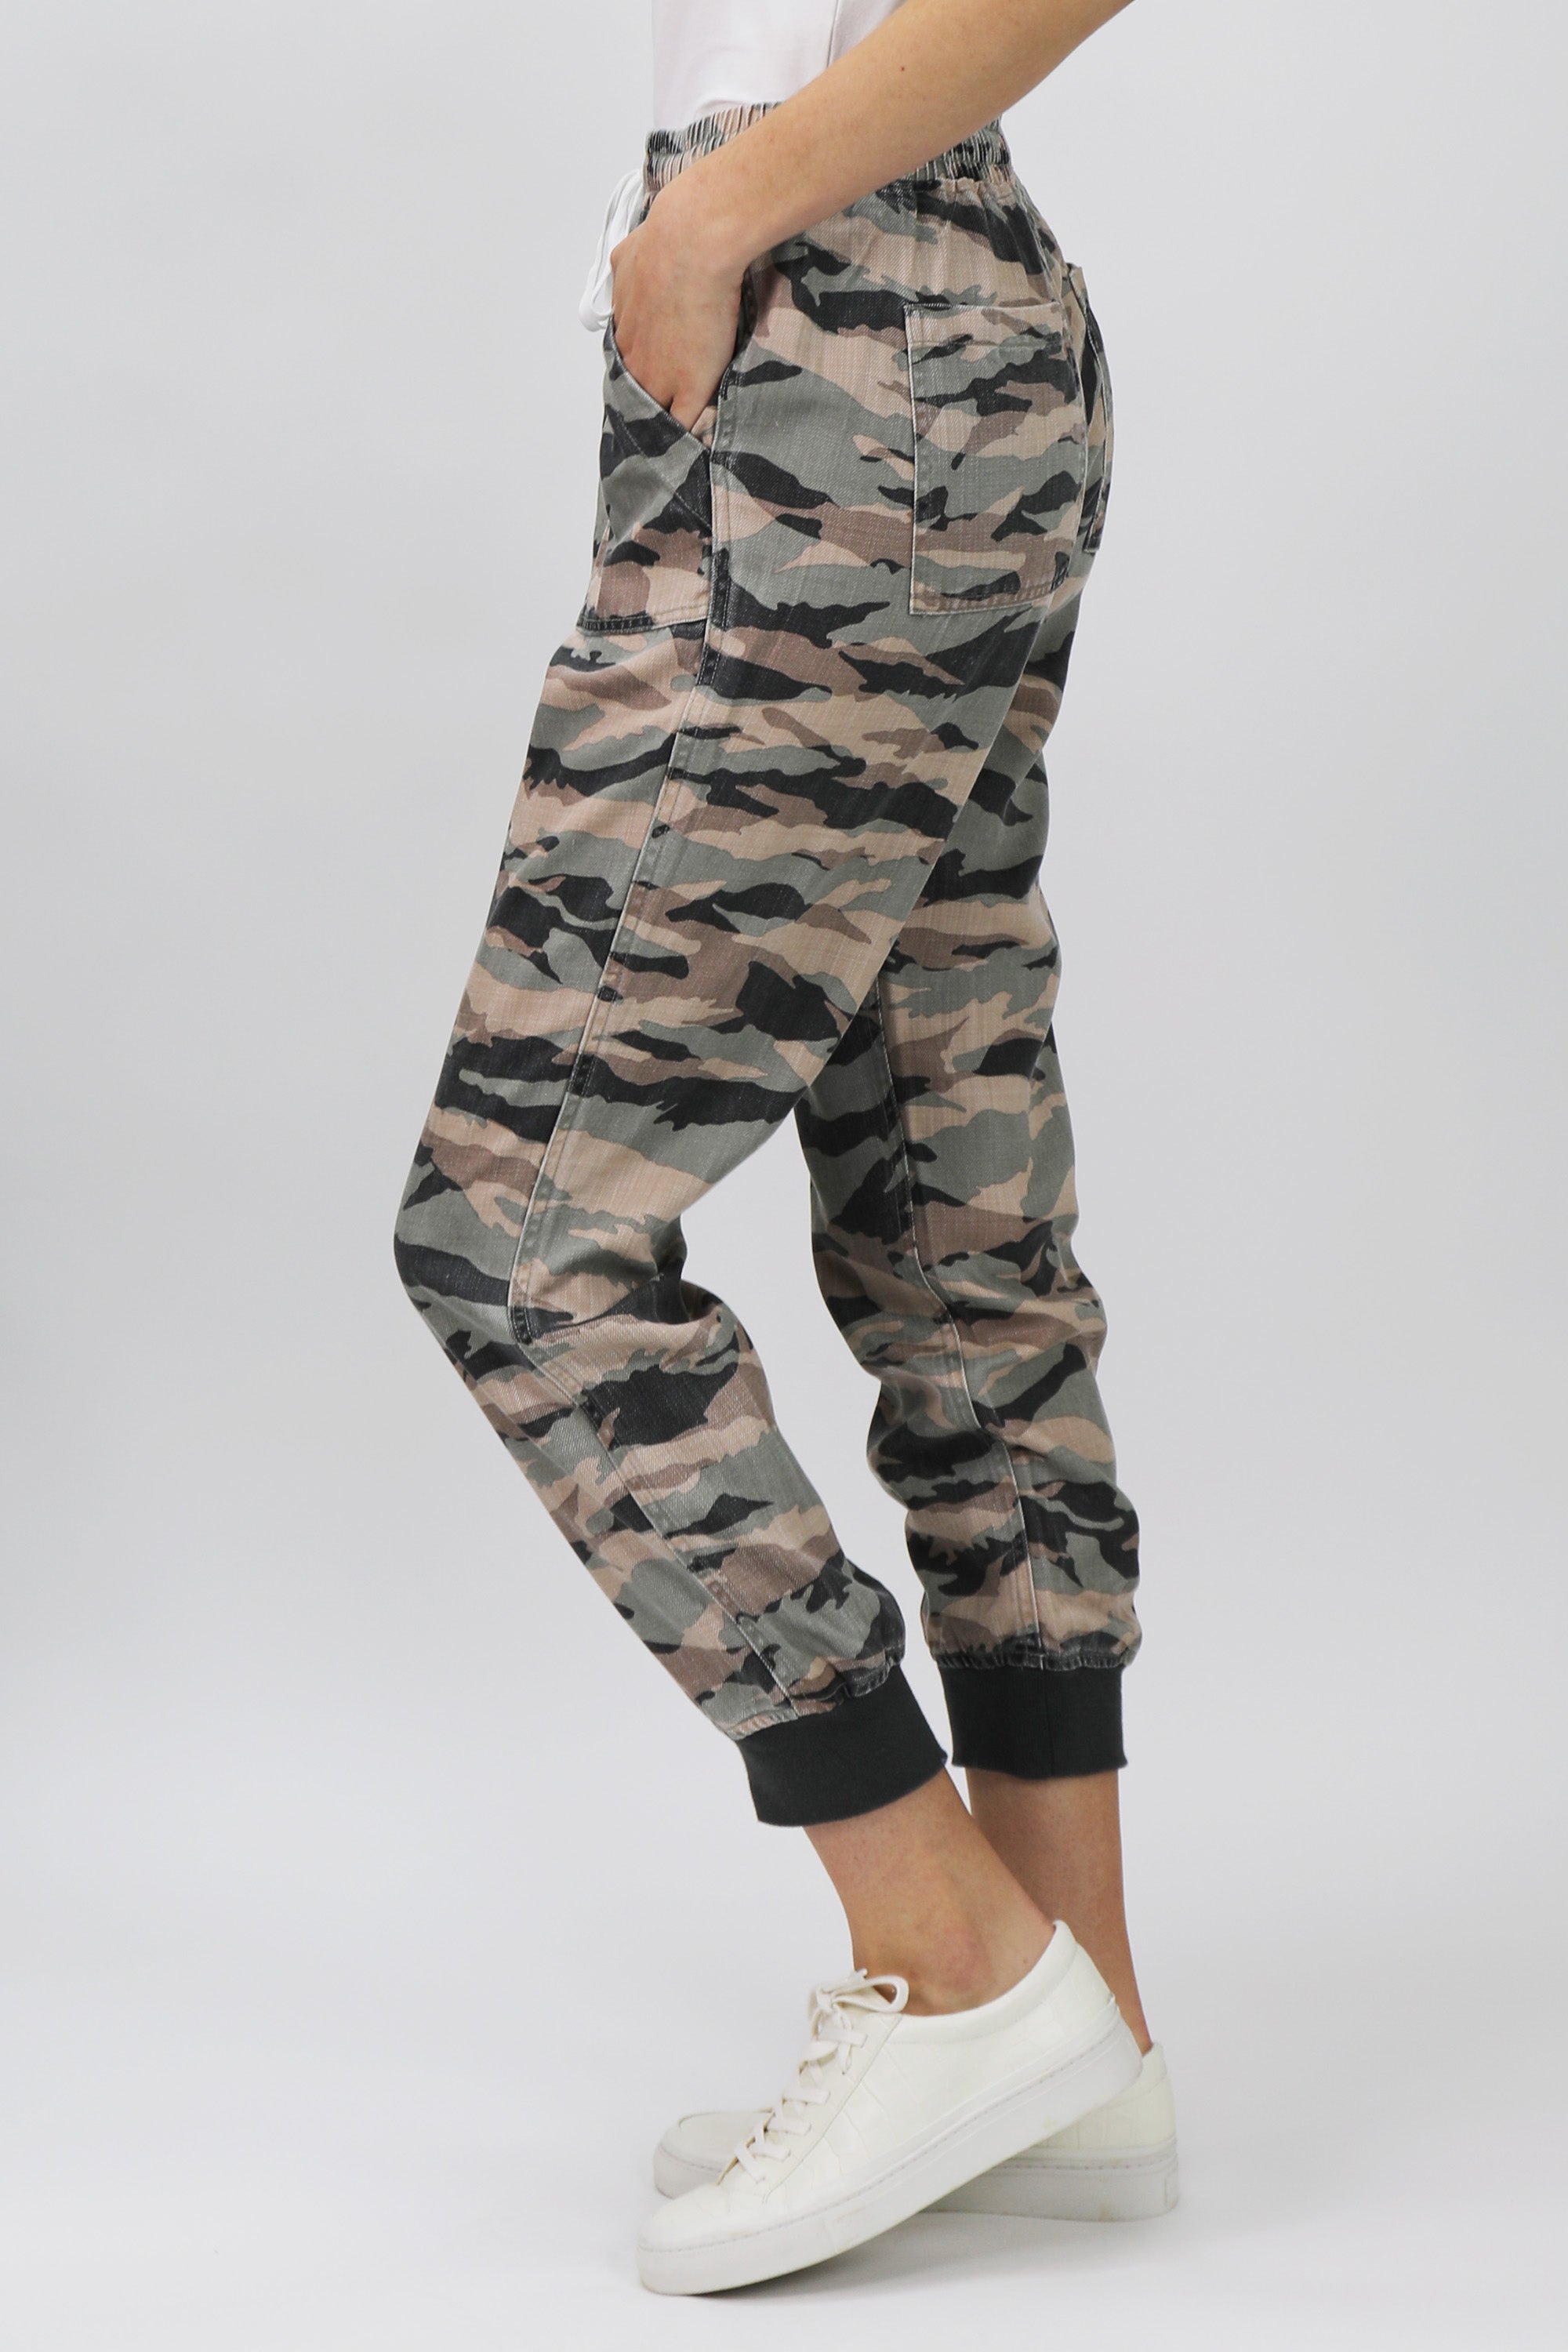 H&M Divided Camouflage Jogger Pants Men Size 34 | eBay